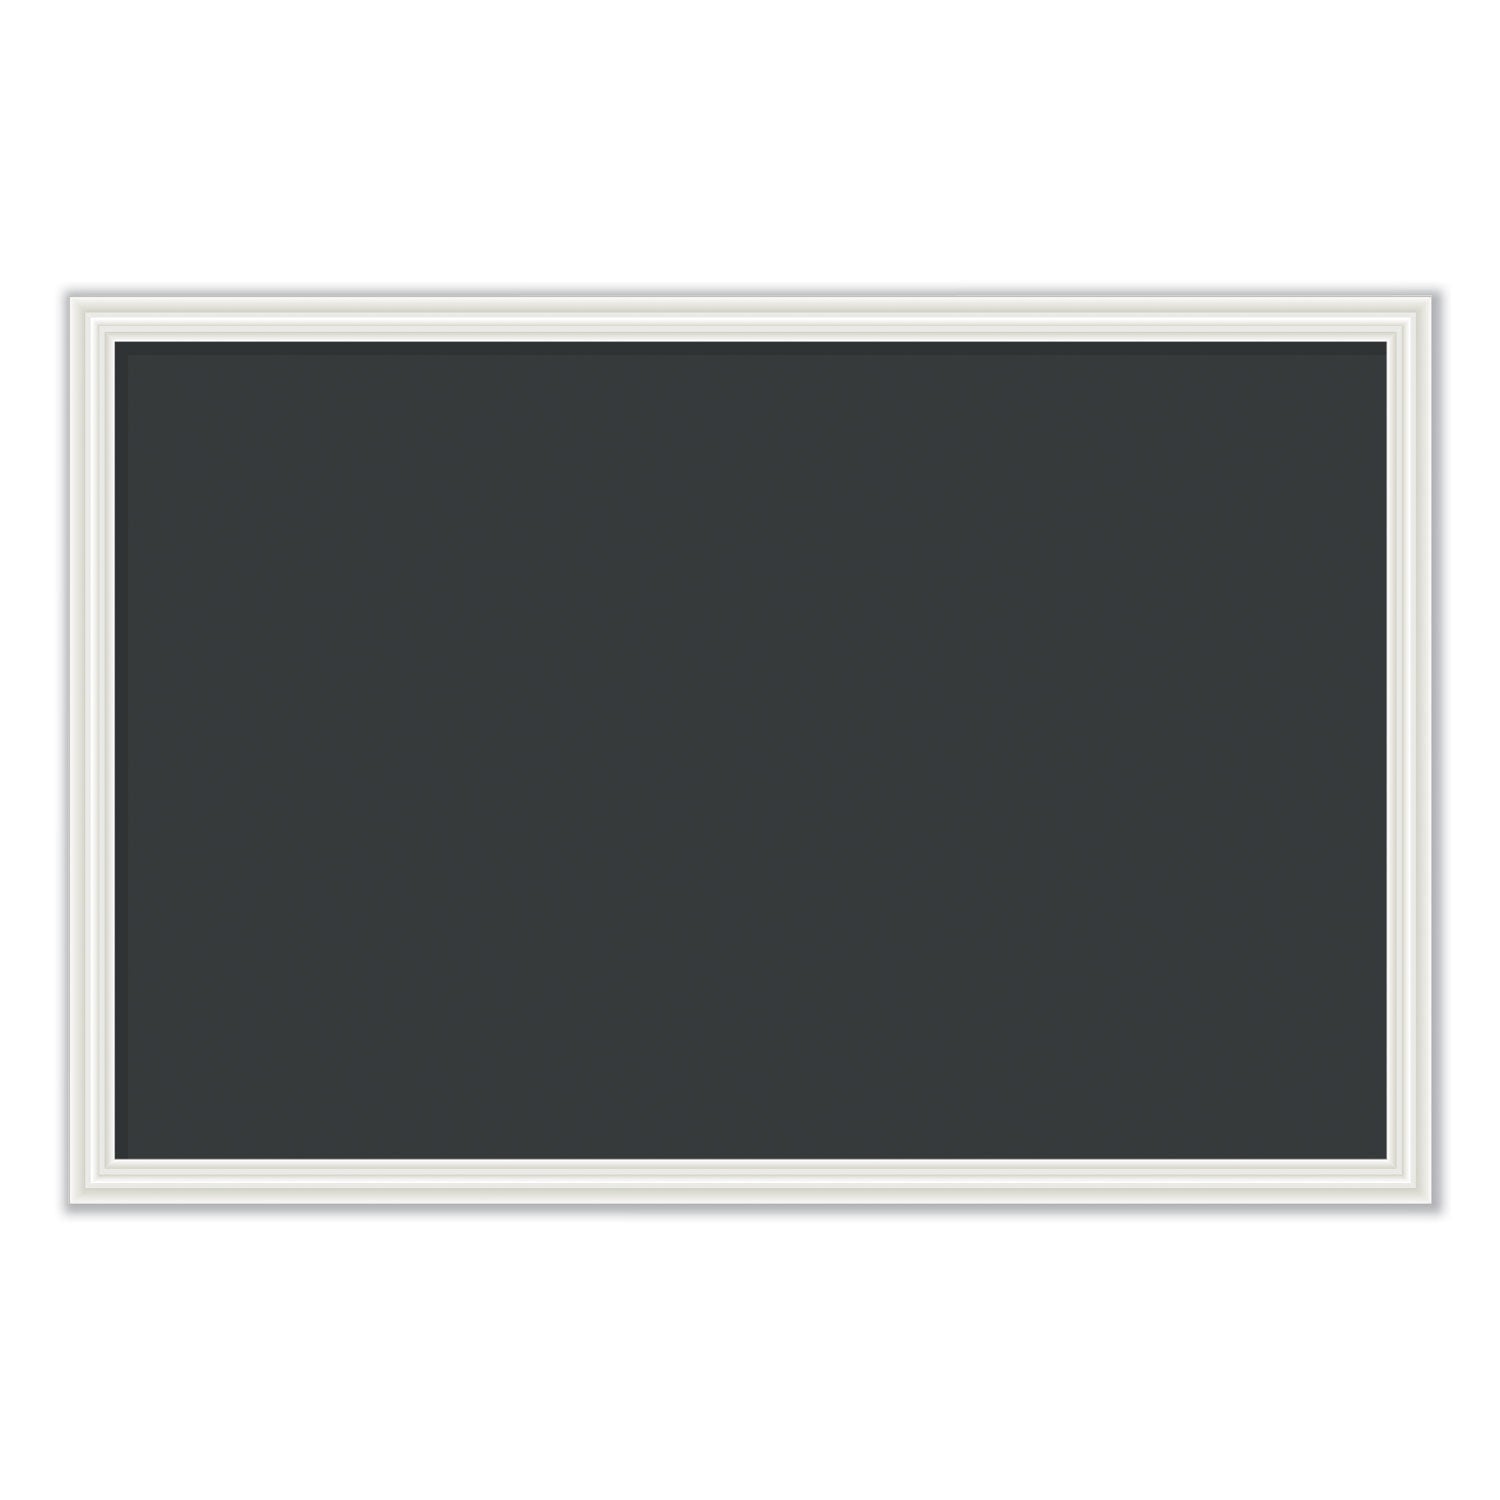 magnetic-chalkboard-with-decor-frame-30-x-20-black-surface-white-wood-frame_ubr2073u0001 - 1